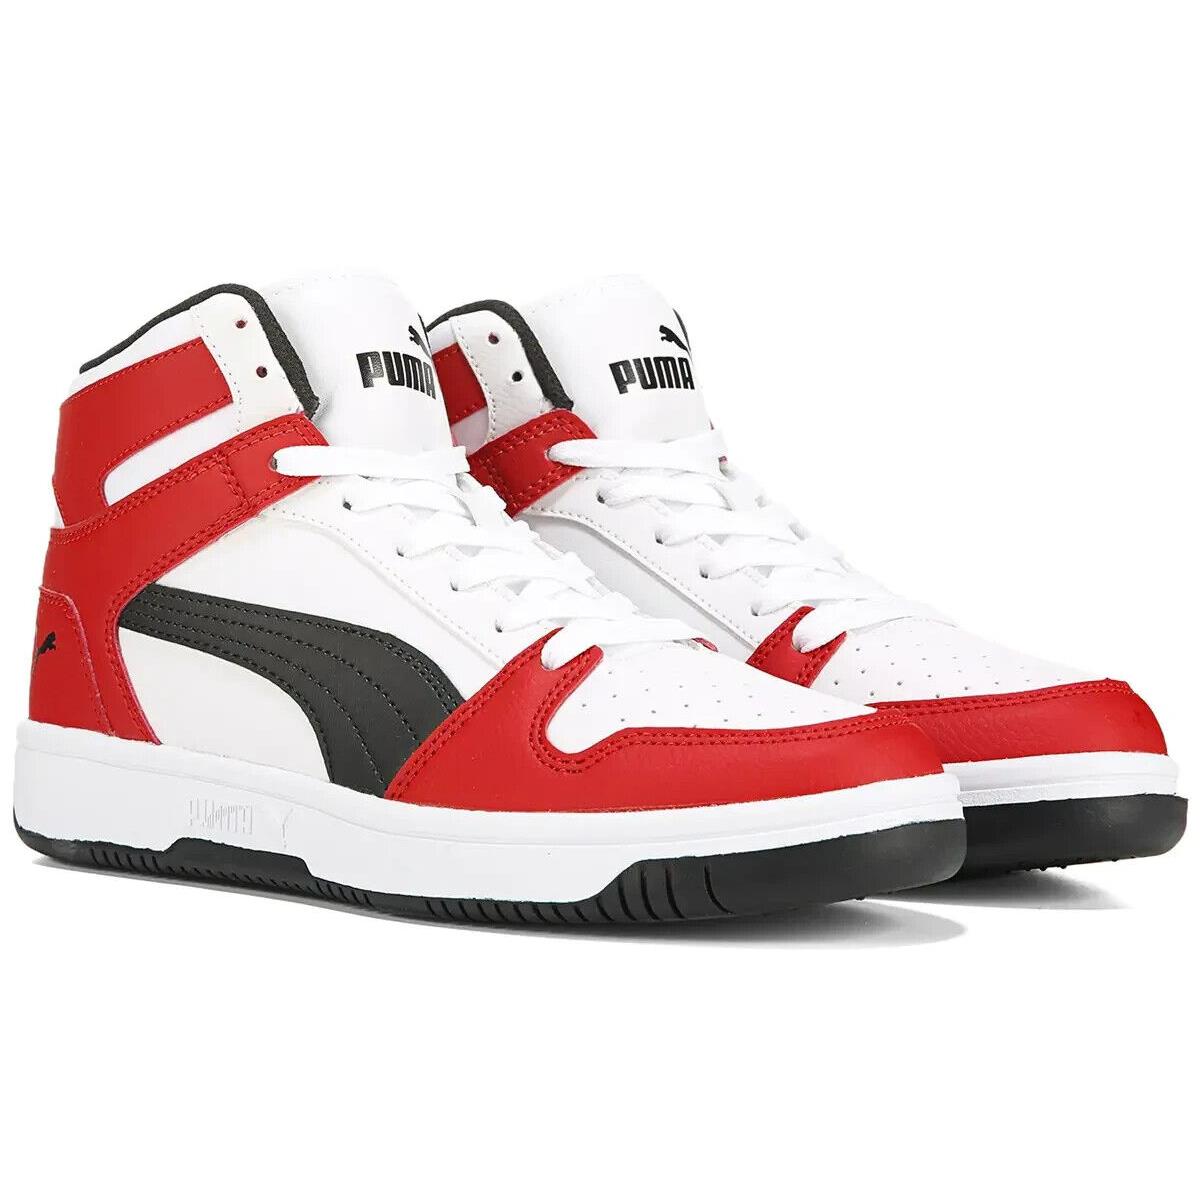 Puma Rebound Layup SL Basketball Shoes Mens Sz 11 Red Black White Mid Top - Multicolor